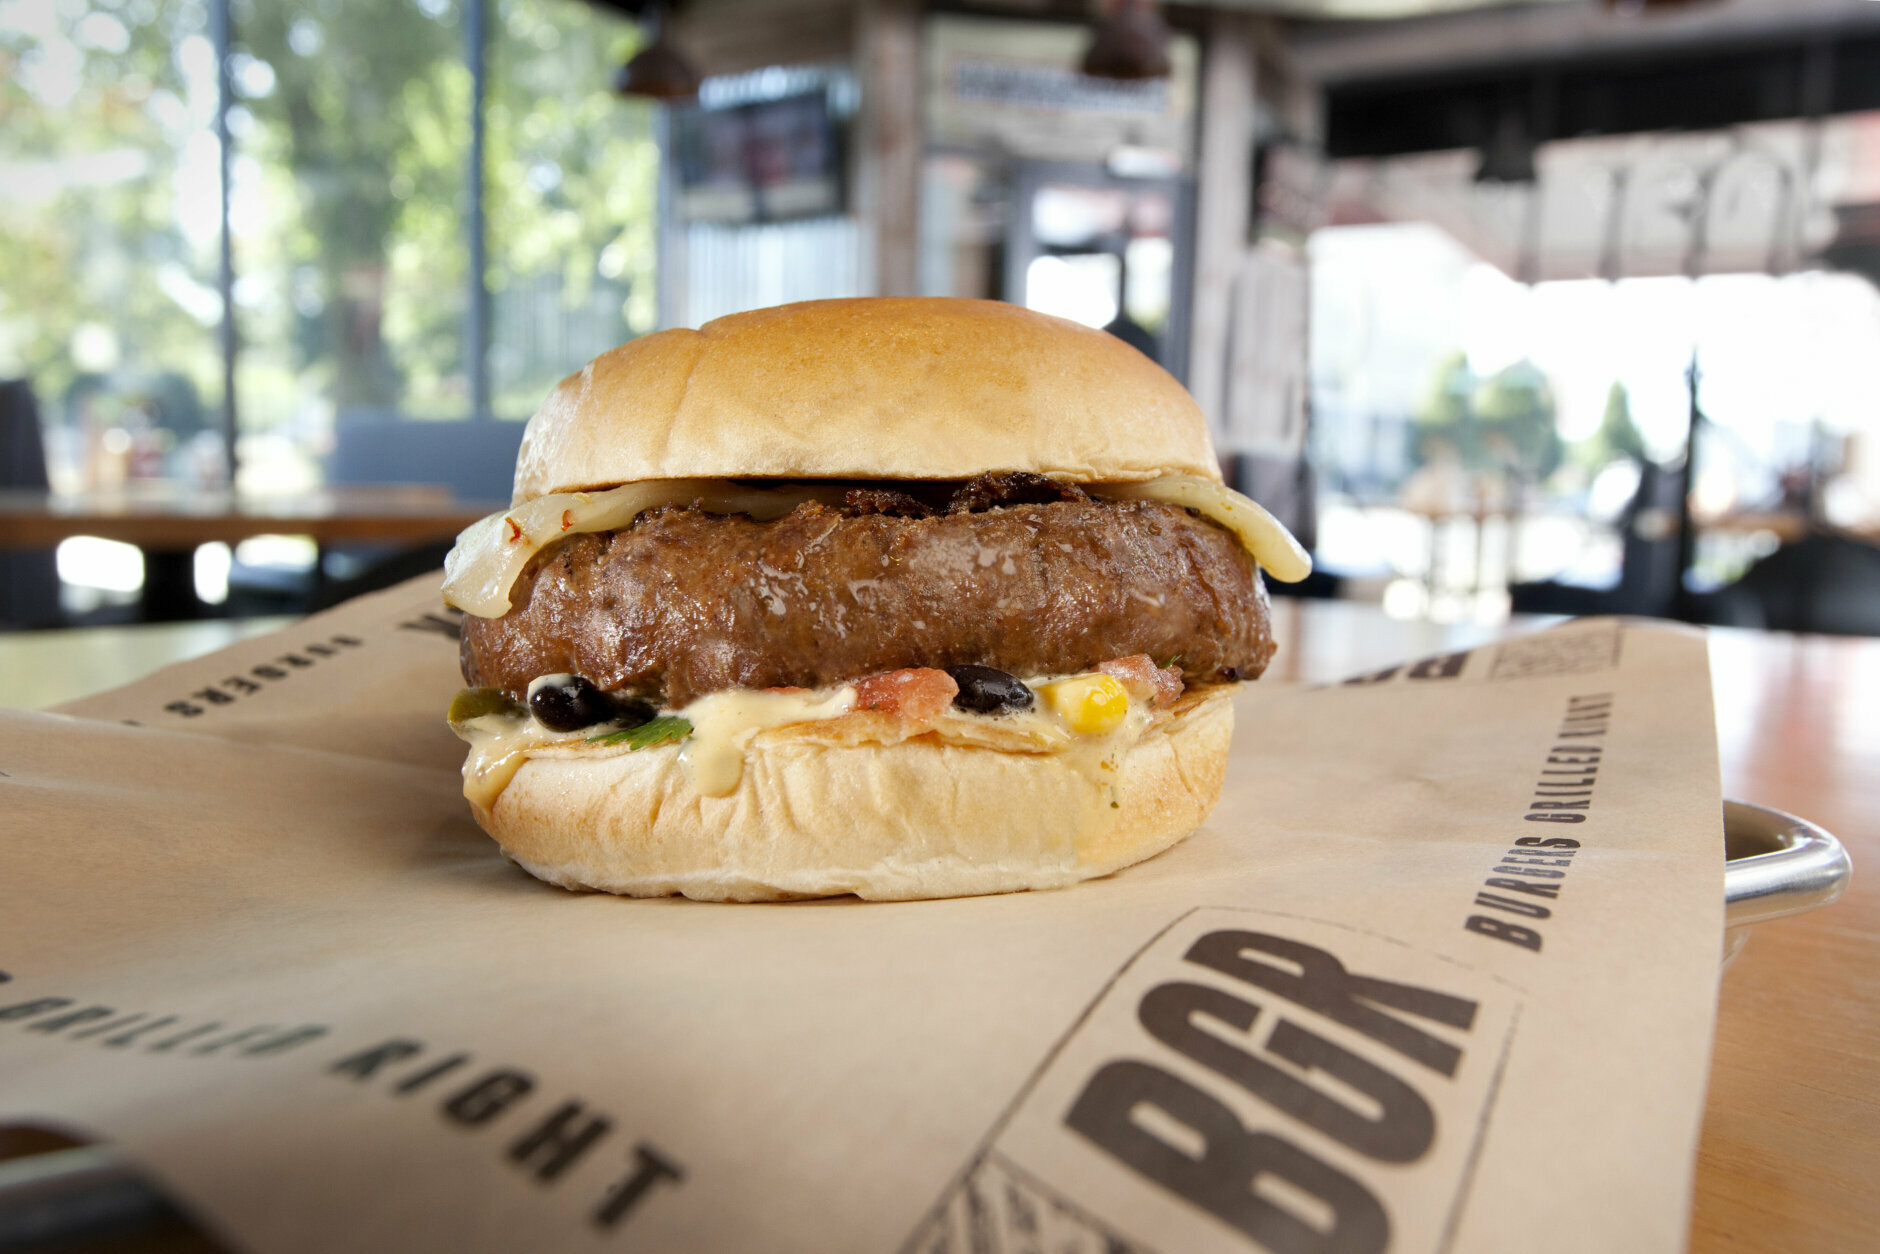 <h3>Best Burger</h3>
<p><a href="https://bgrtheburgerjoint.com/" target="_blank" rel="noopener"><strong>BGR The Burger Joint</strong></a></p>
<p><em>Locations in D.C., Maryland and Virginia</em></p>
<p>Runner-up: <a href="https://www.eatbigbuns.com/" target="_blank" rel="noopener">Big Buns Damn Good Burger Co.</a></p>
<p><a href="https://wtop.com/business-finance/2021/08/wtop-top-10-2021-best-burger/" target="_blank" rel="noopener">See the TOP 10 places with the best burgers</a>.</p>
